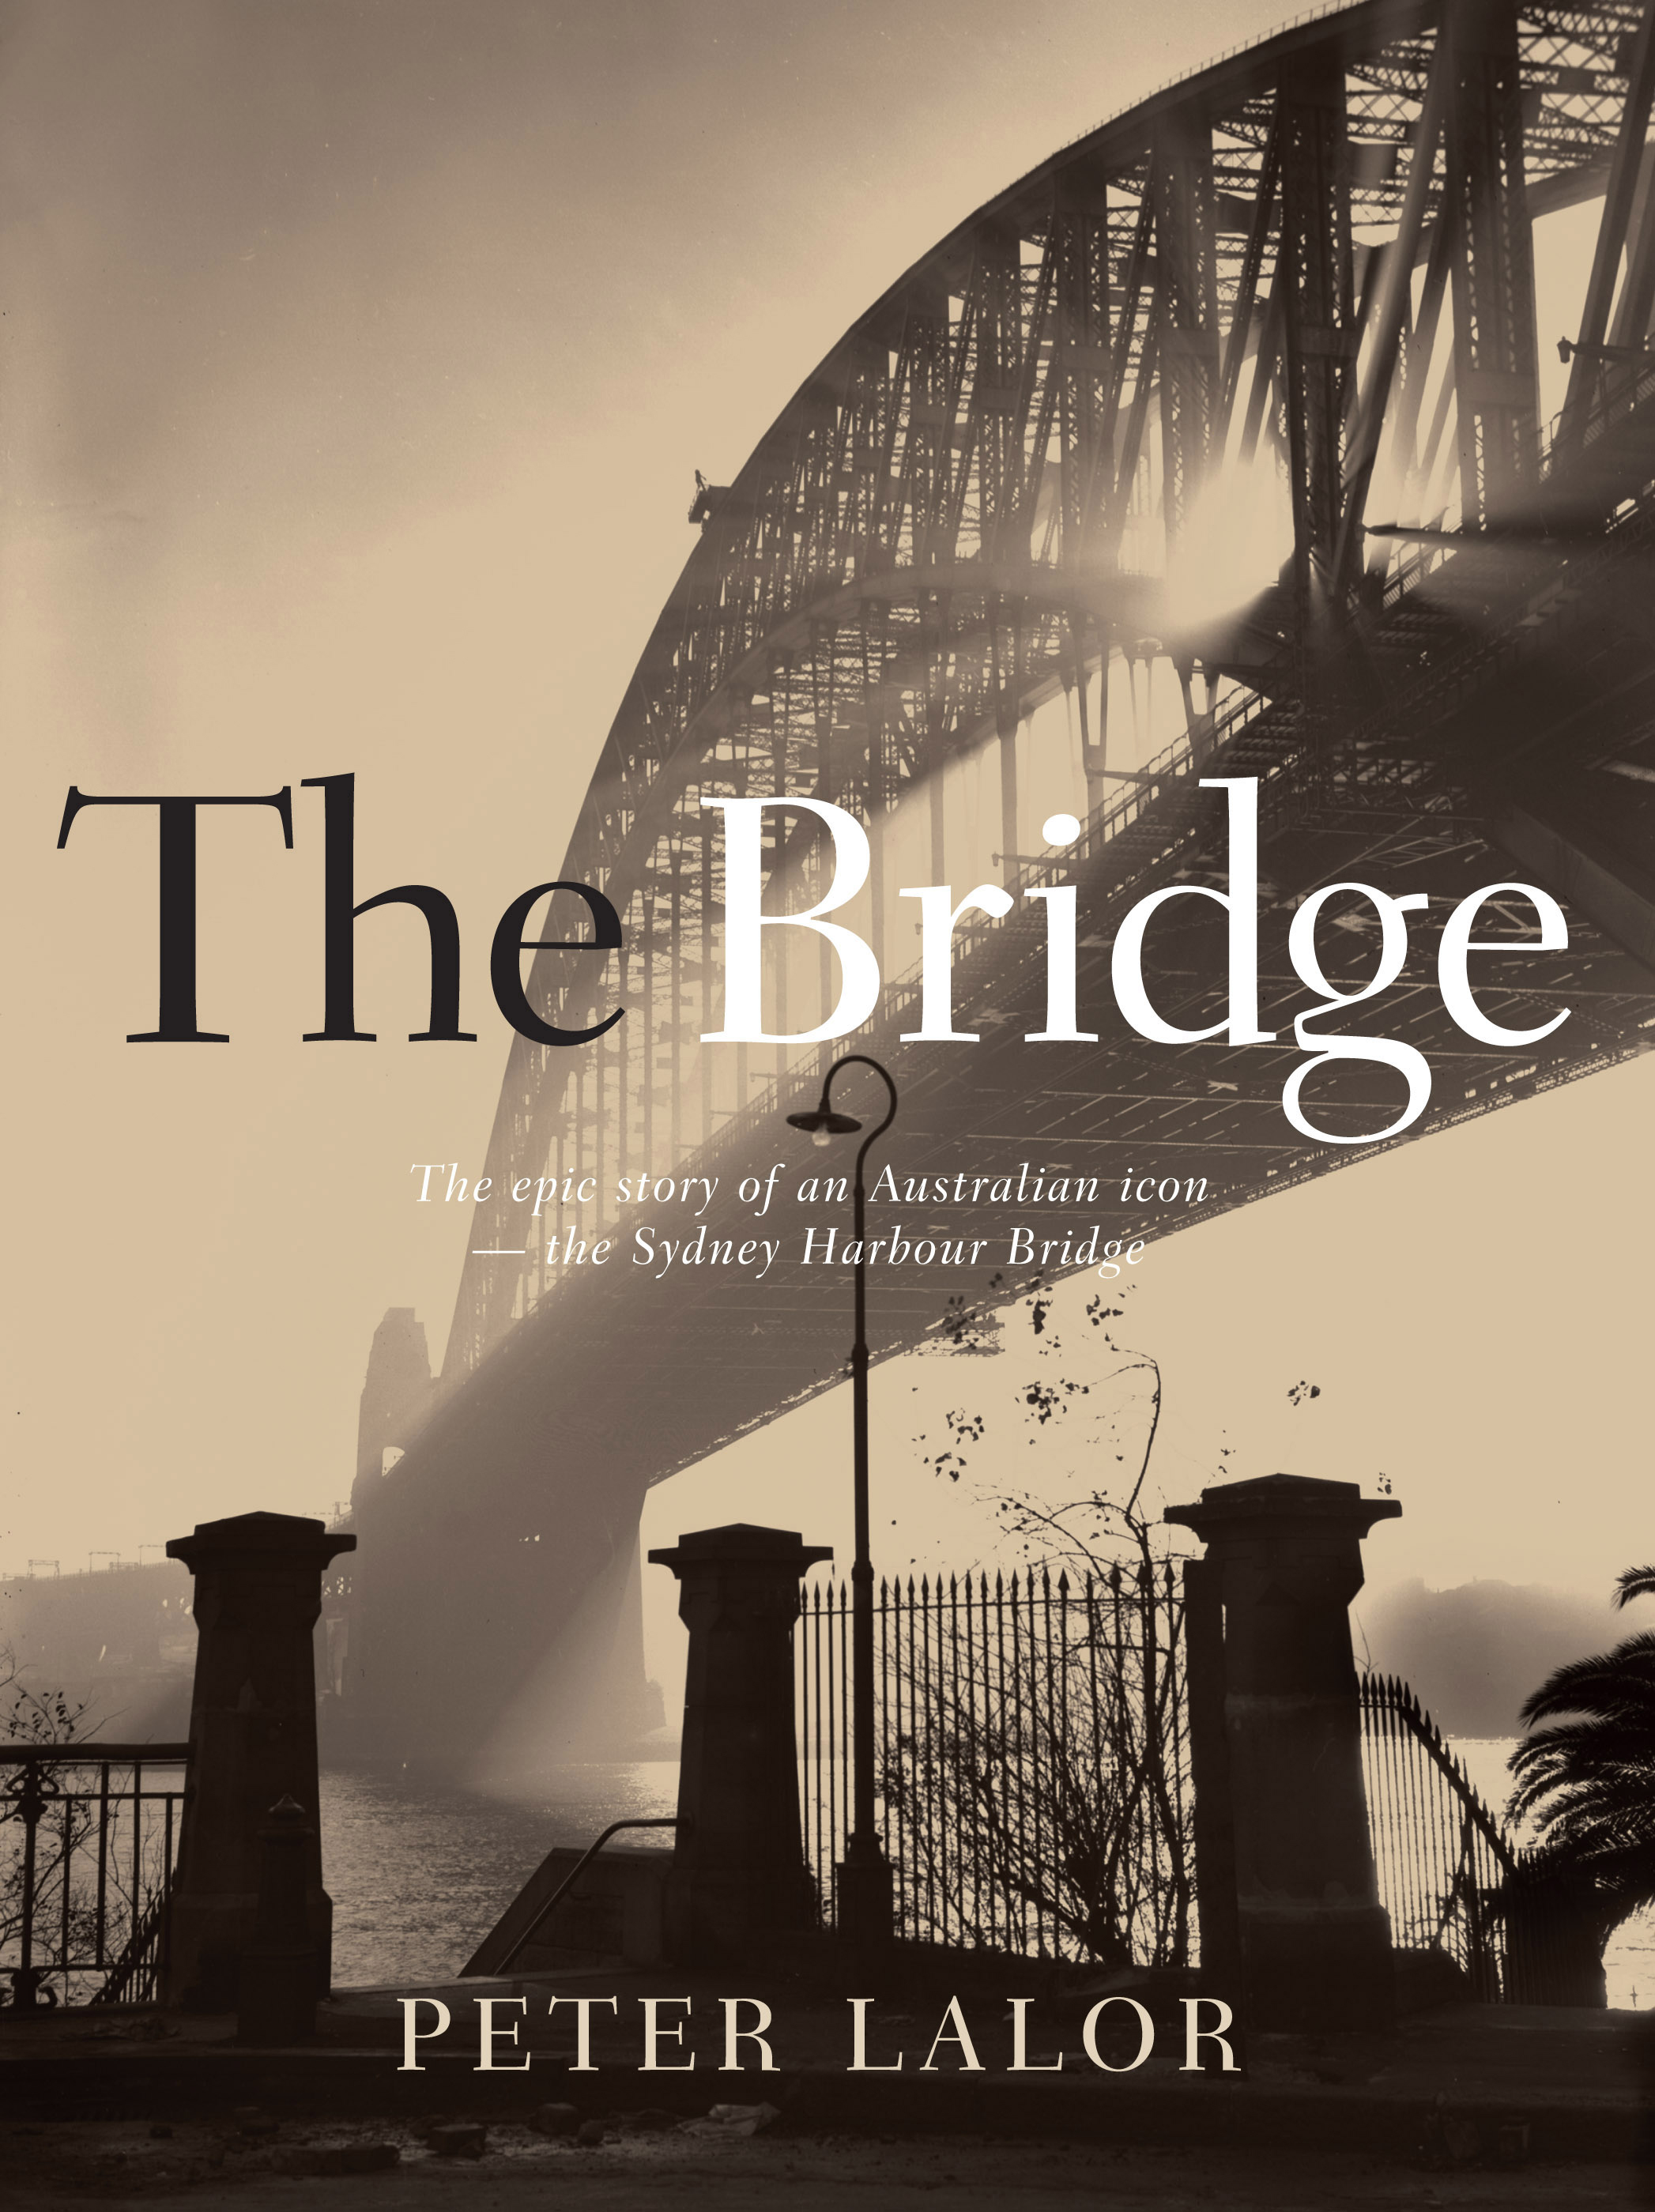 The Bridge - Peter Lalor - 9781741750270 - Allen & Unwin - Australia